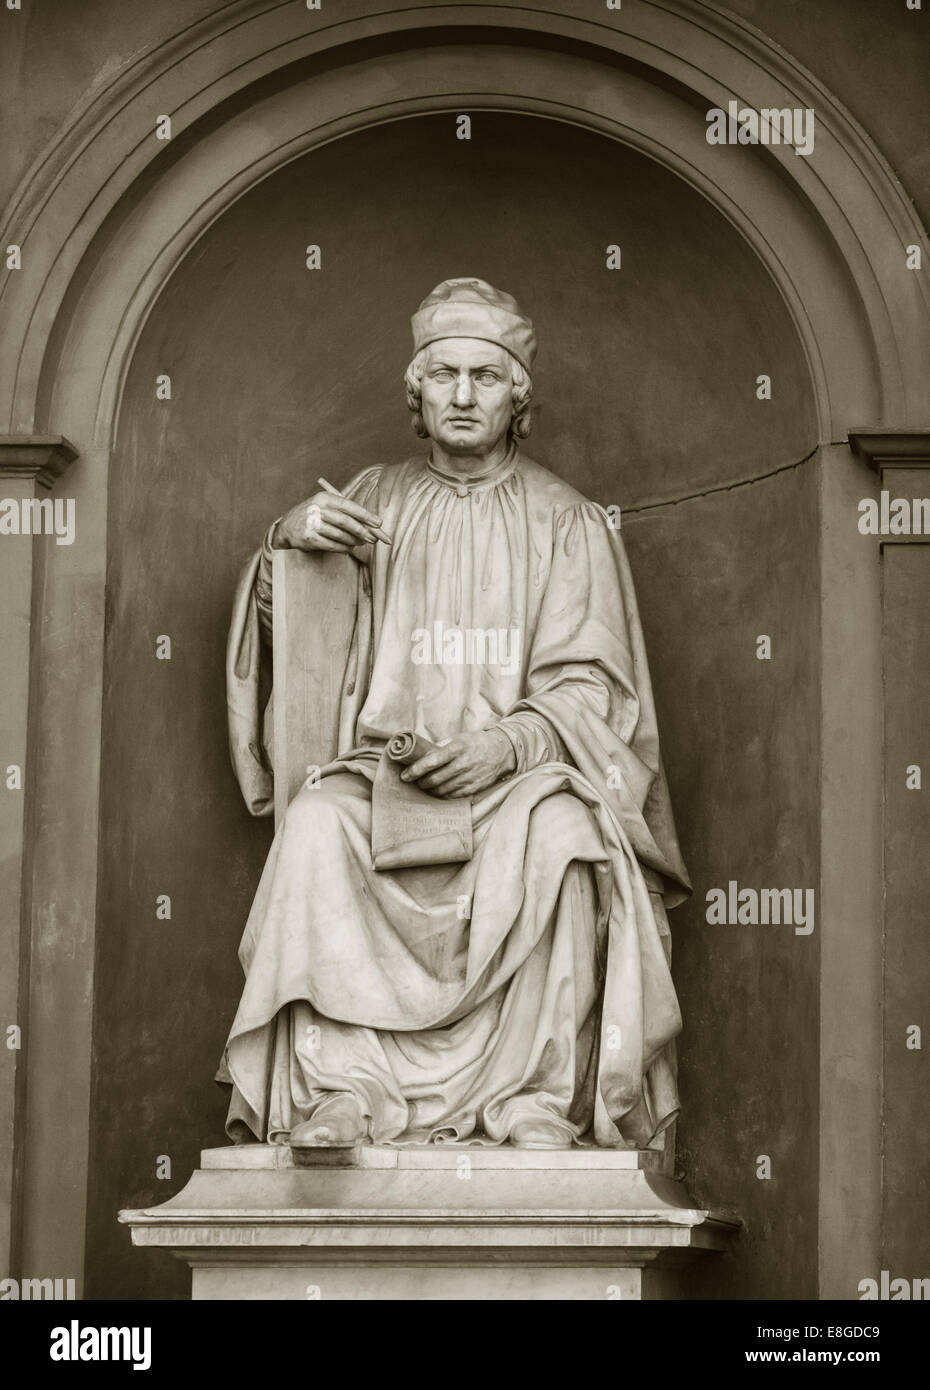 Statue of Arnolfo Di Cambio, Italian architect and sculptor, by Luigi  Pampaloni, outside the Uffizi Gallery, Florence, Italy Stock Photo - Alamy